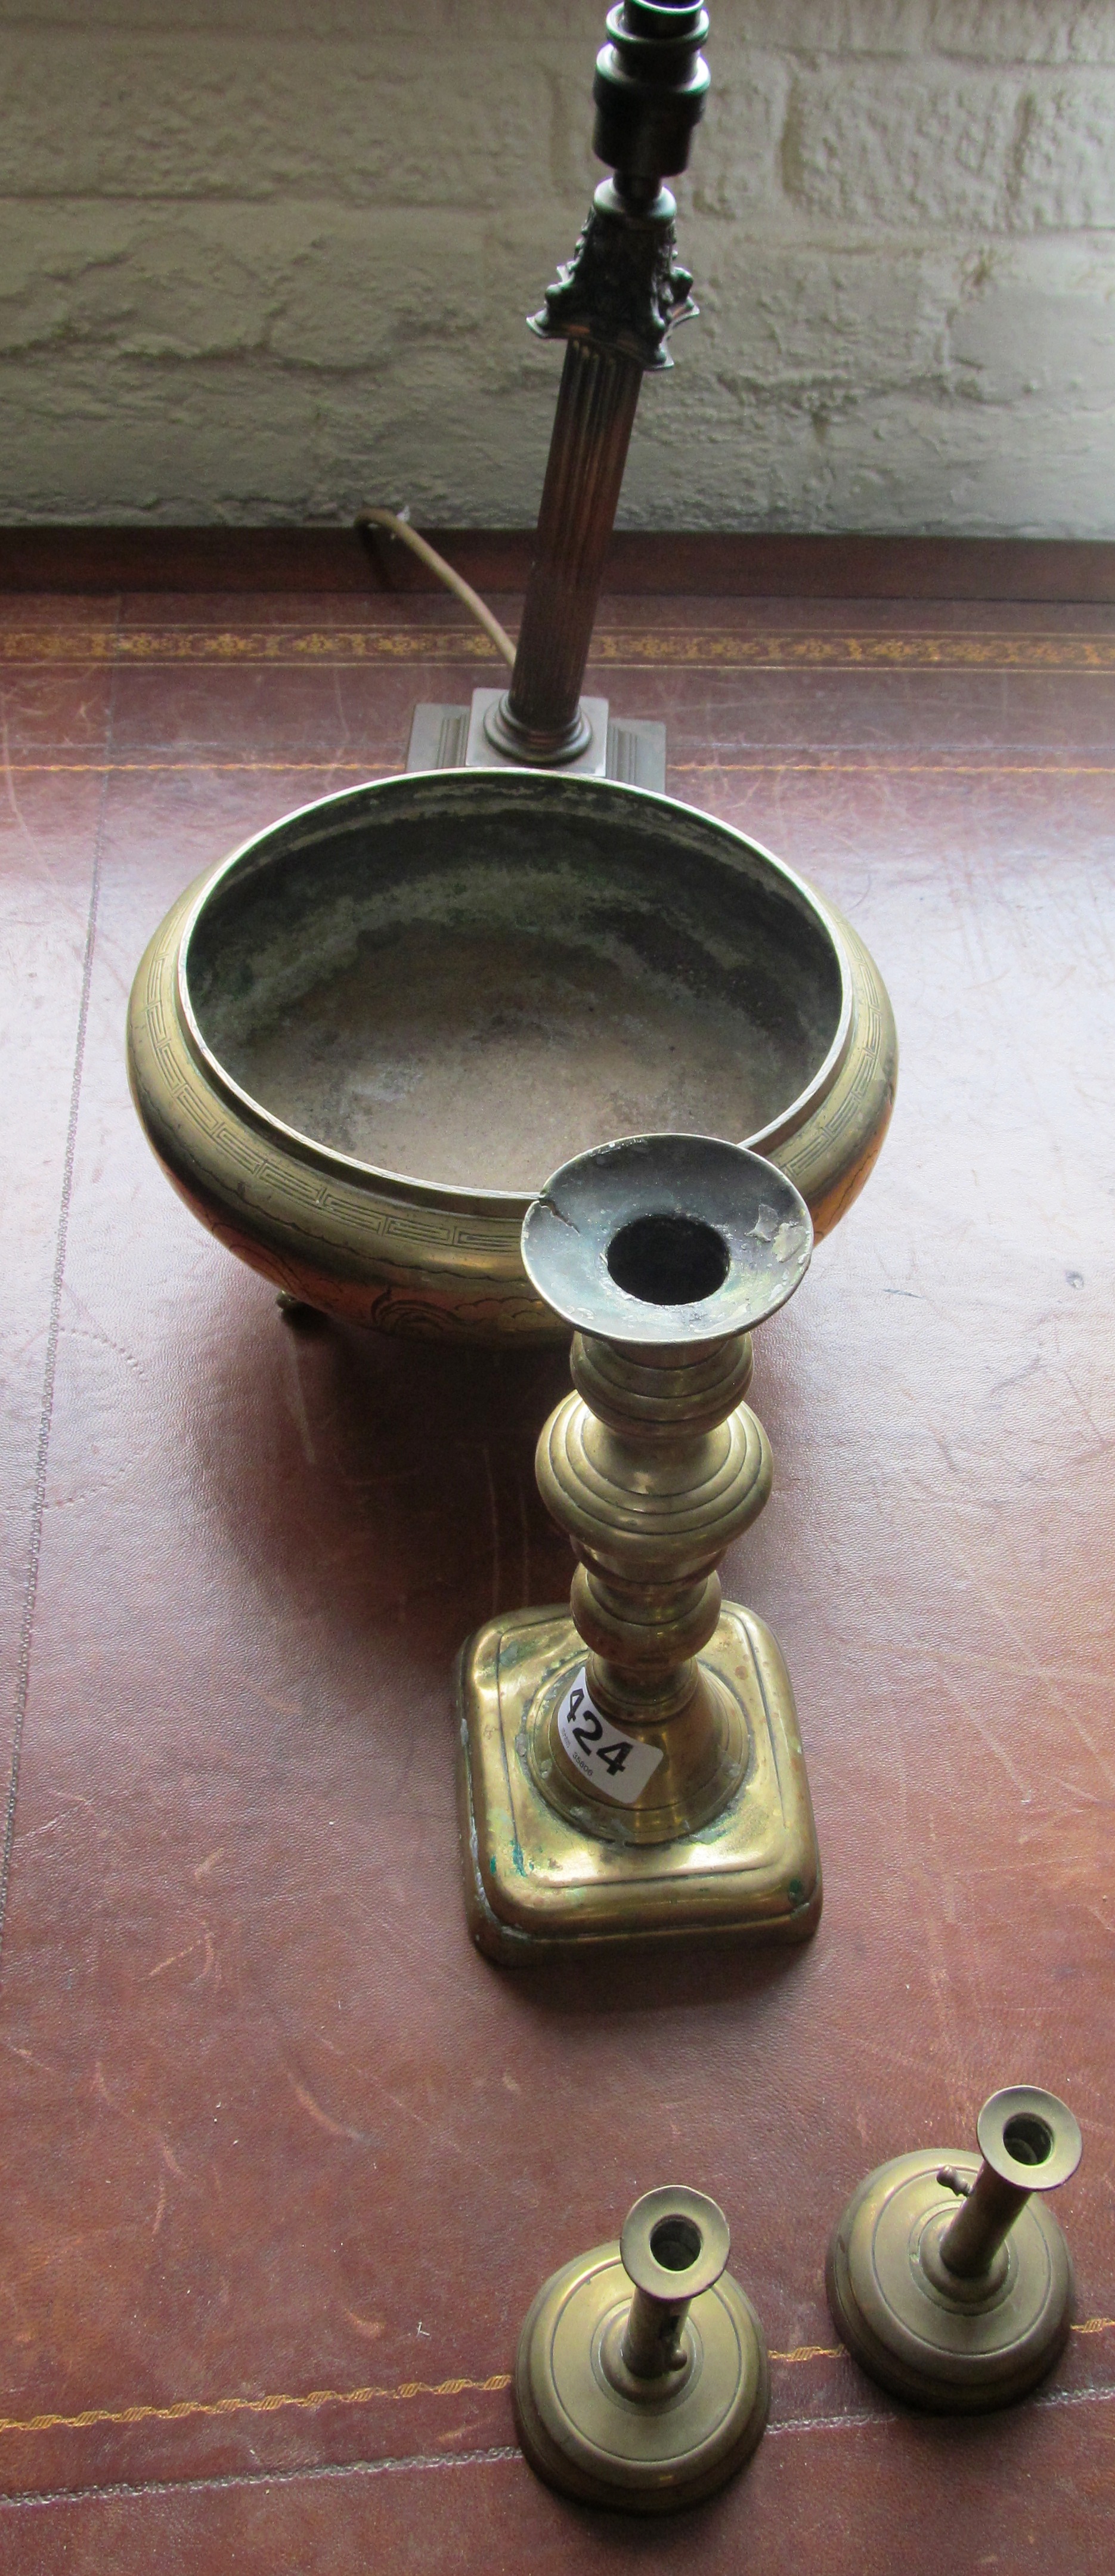 A brass bowl, candlestick and 2 small candlesticks